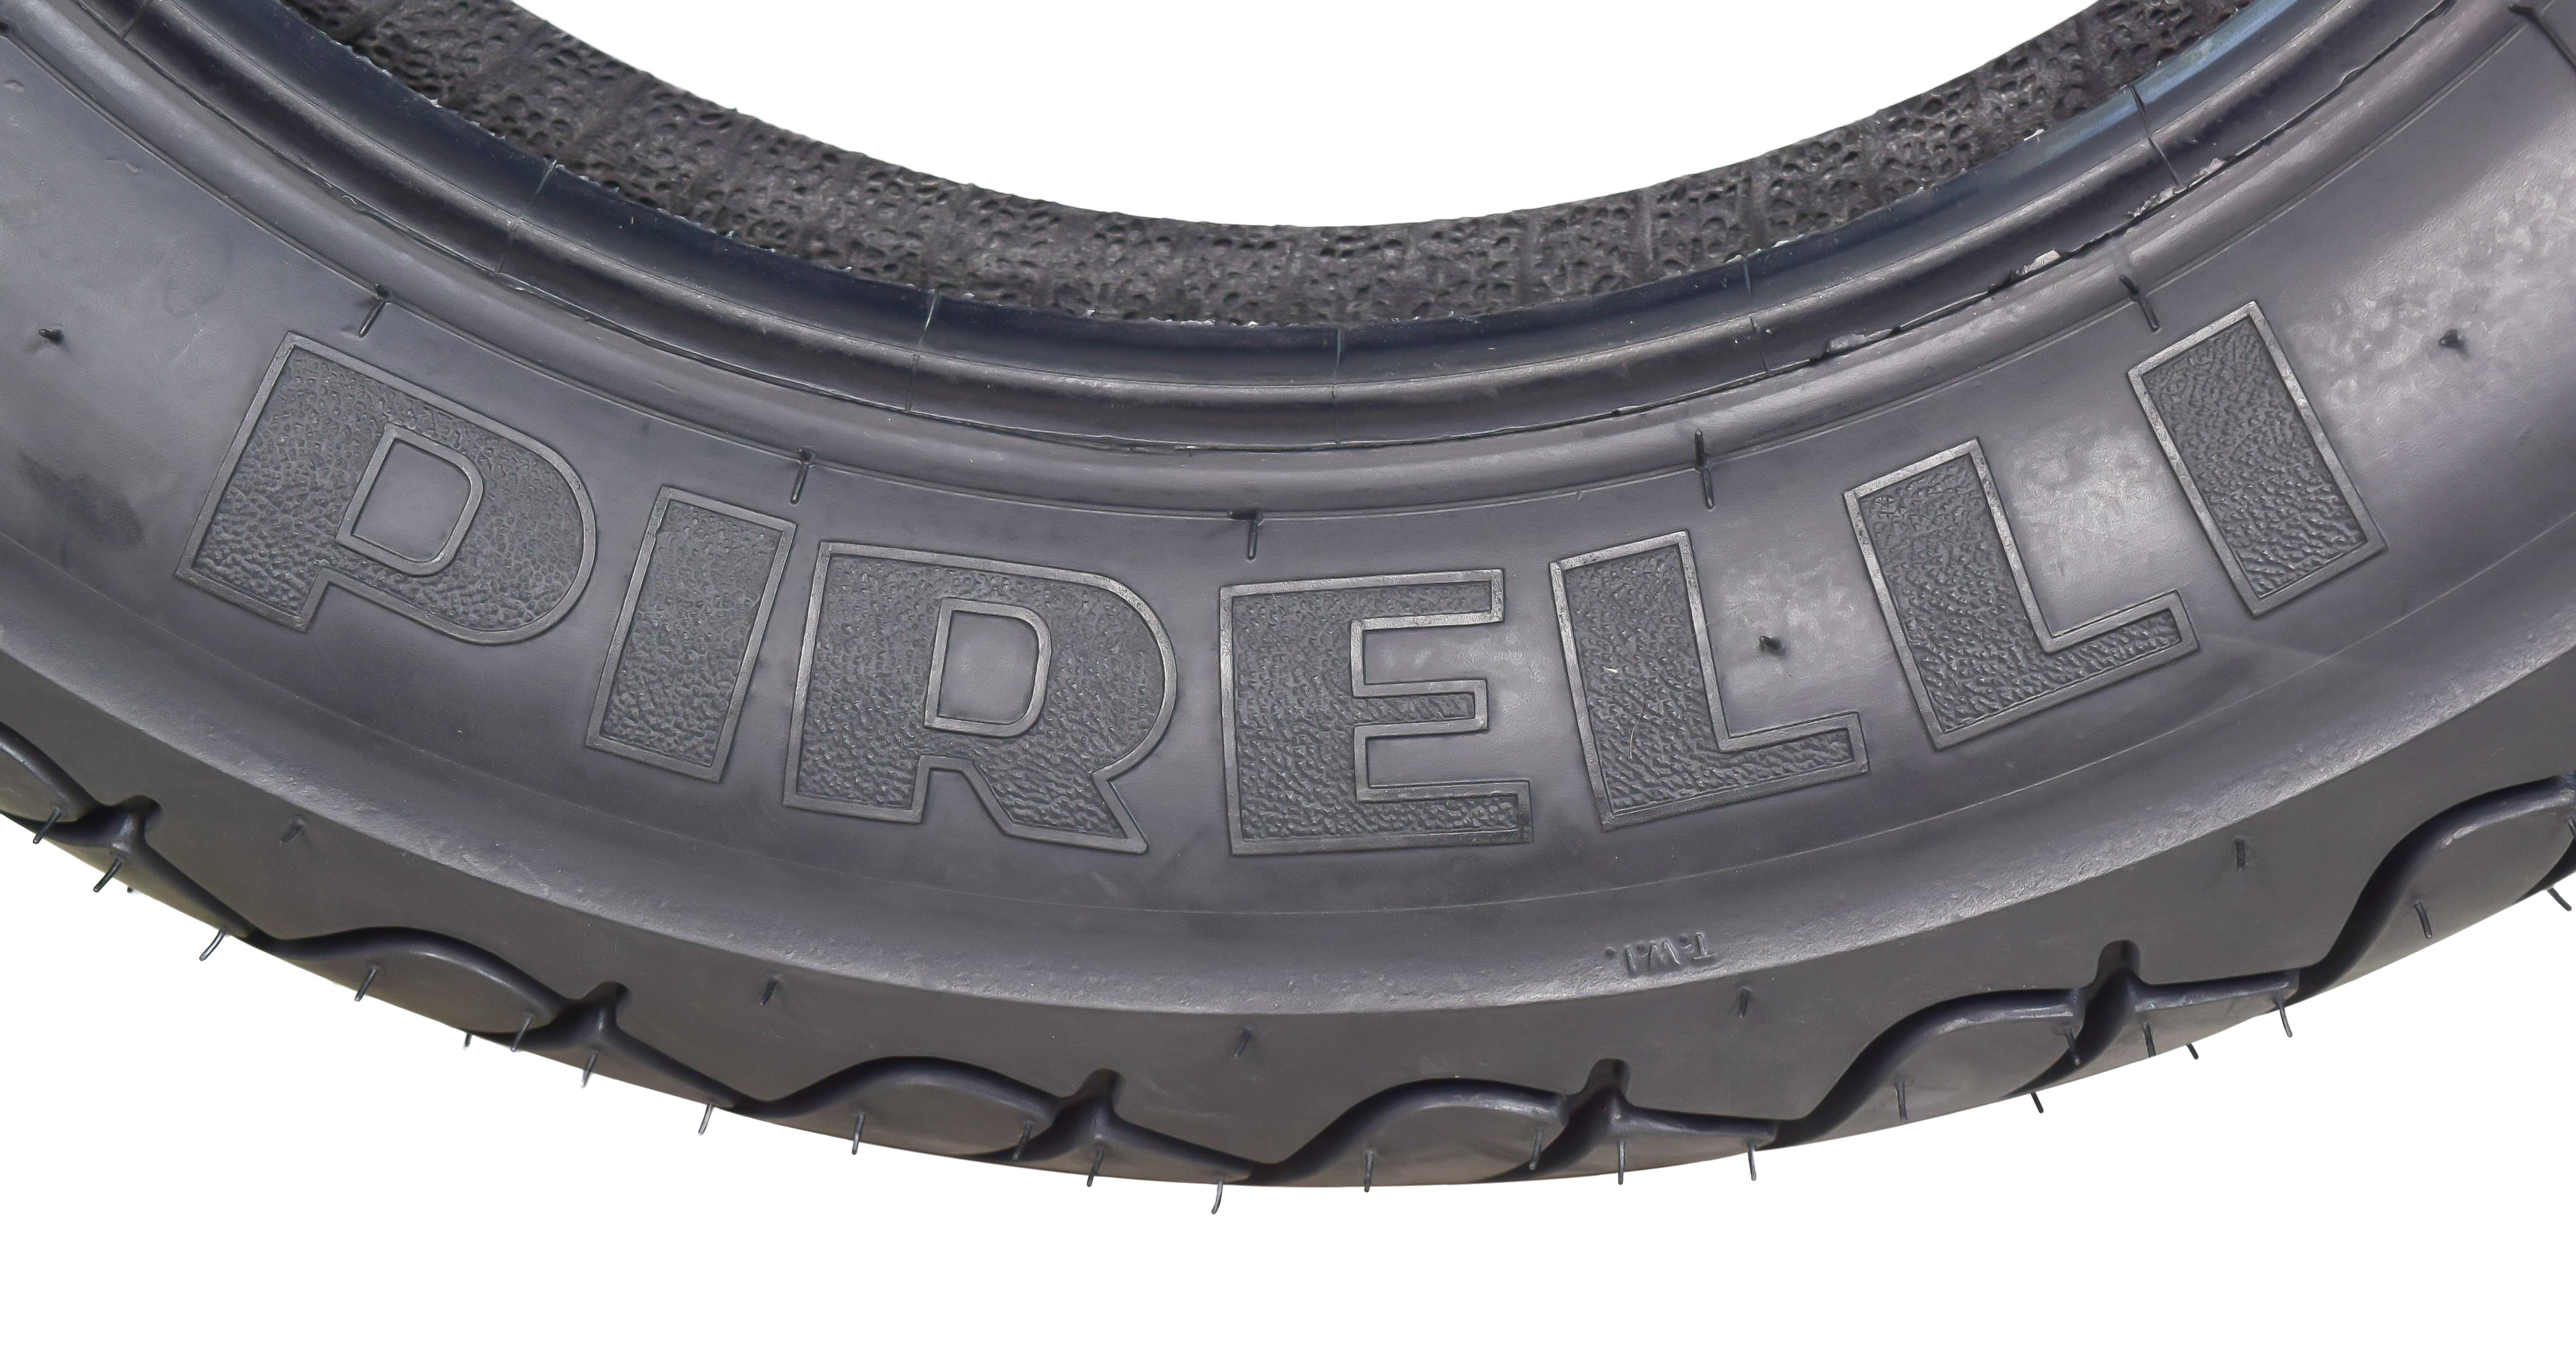 Pirelli MT 66 Route 1003300 130/90-15 M/C 66S Rear Motorcycle Cruiser Tire